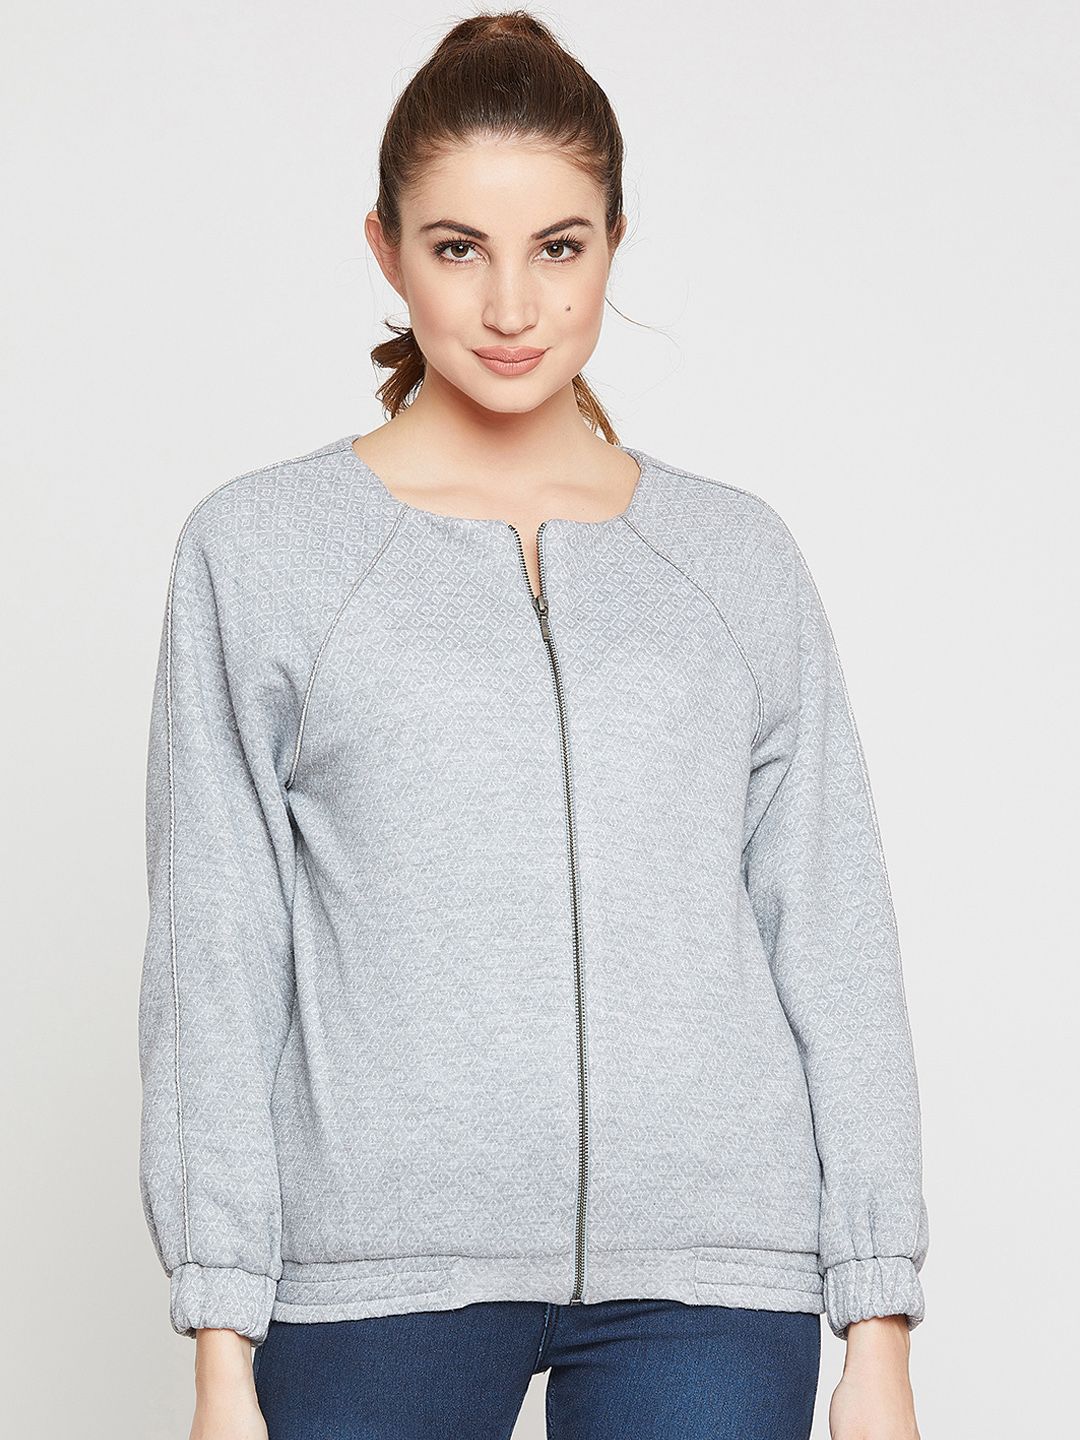 Marie Claire Women Grey Self Design Sweatshirt Price in India